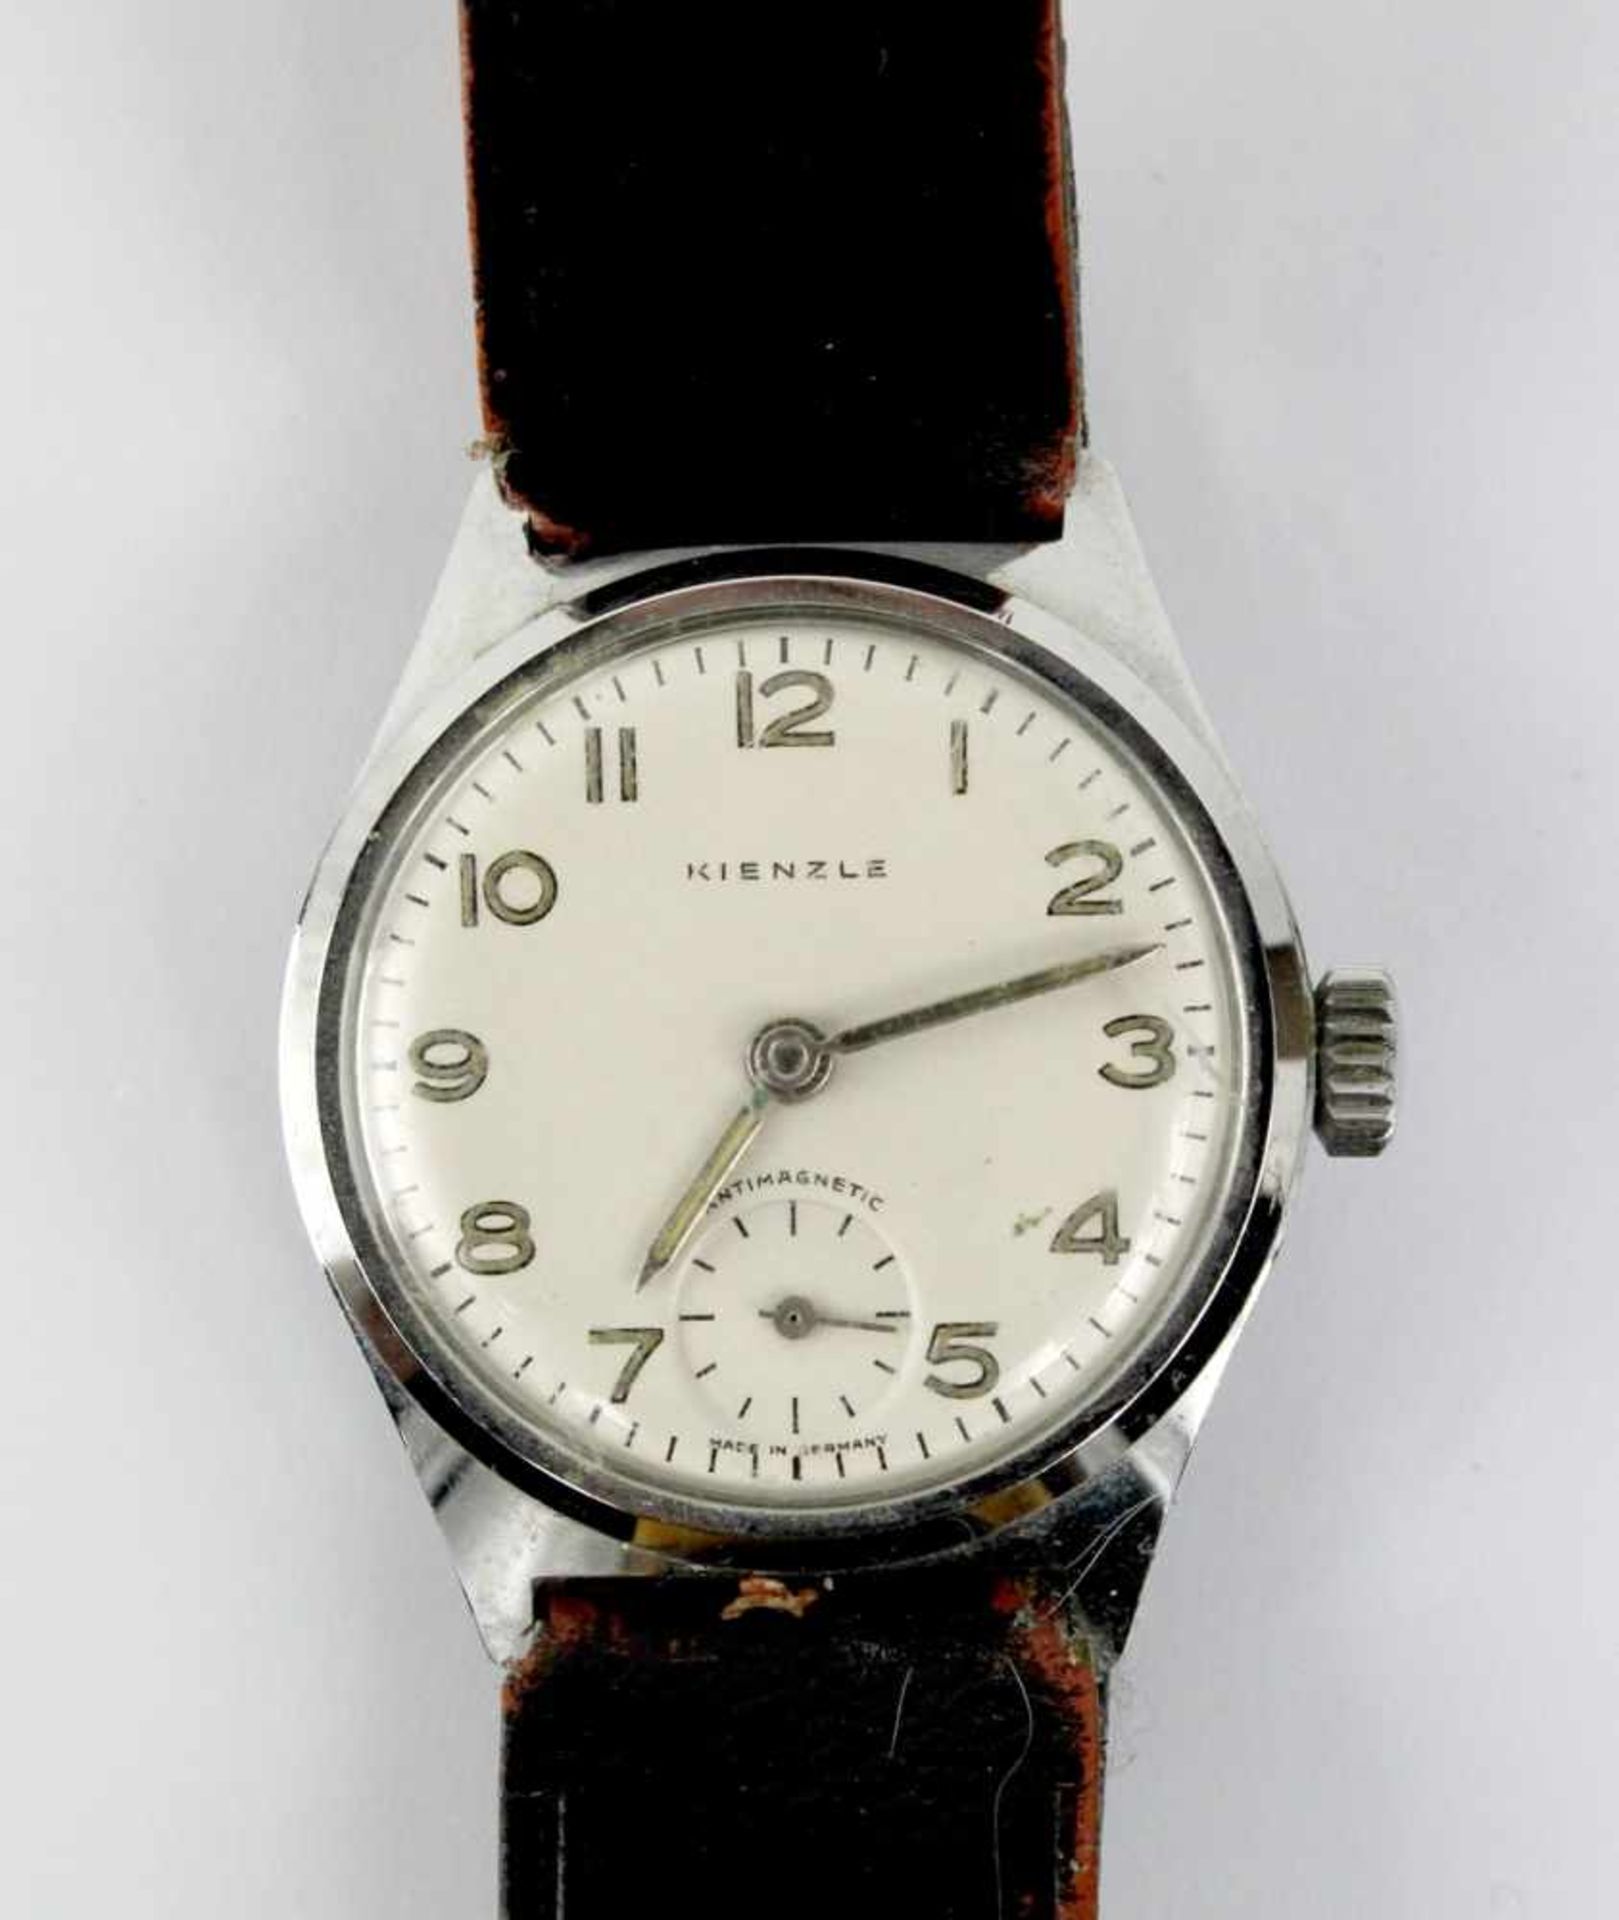 Kienzle Antimagnetic Armbanduhr 1950er Jahre